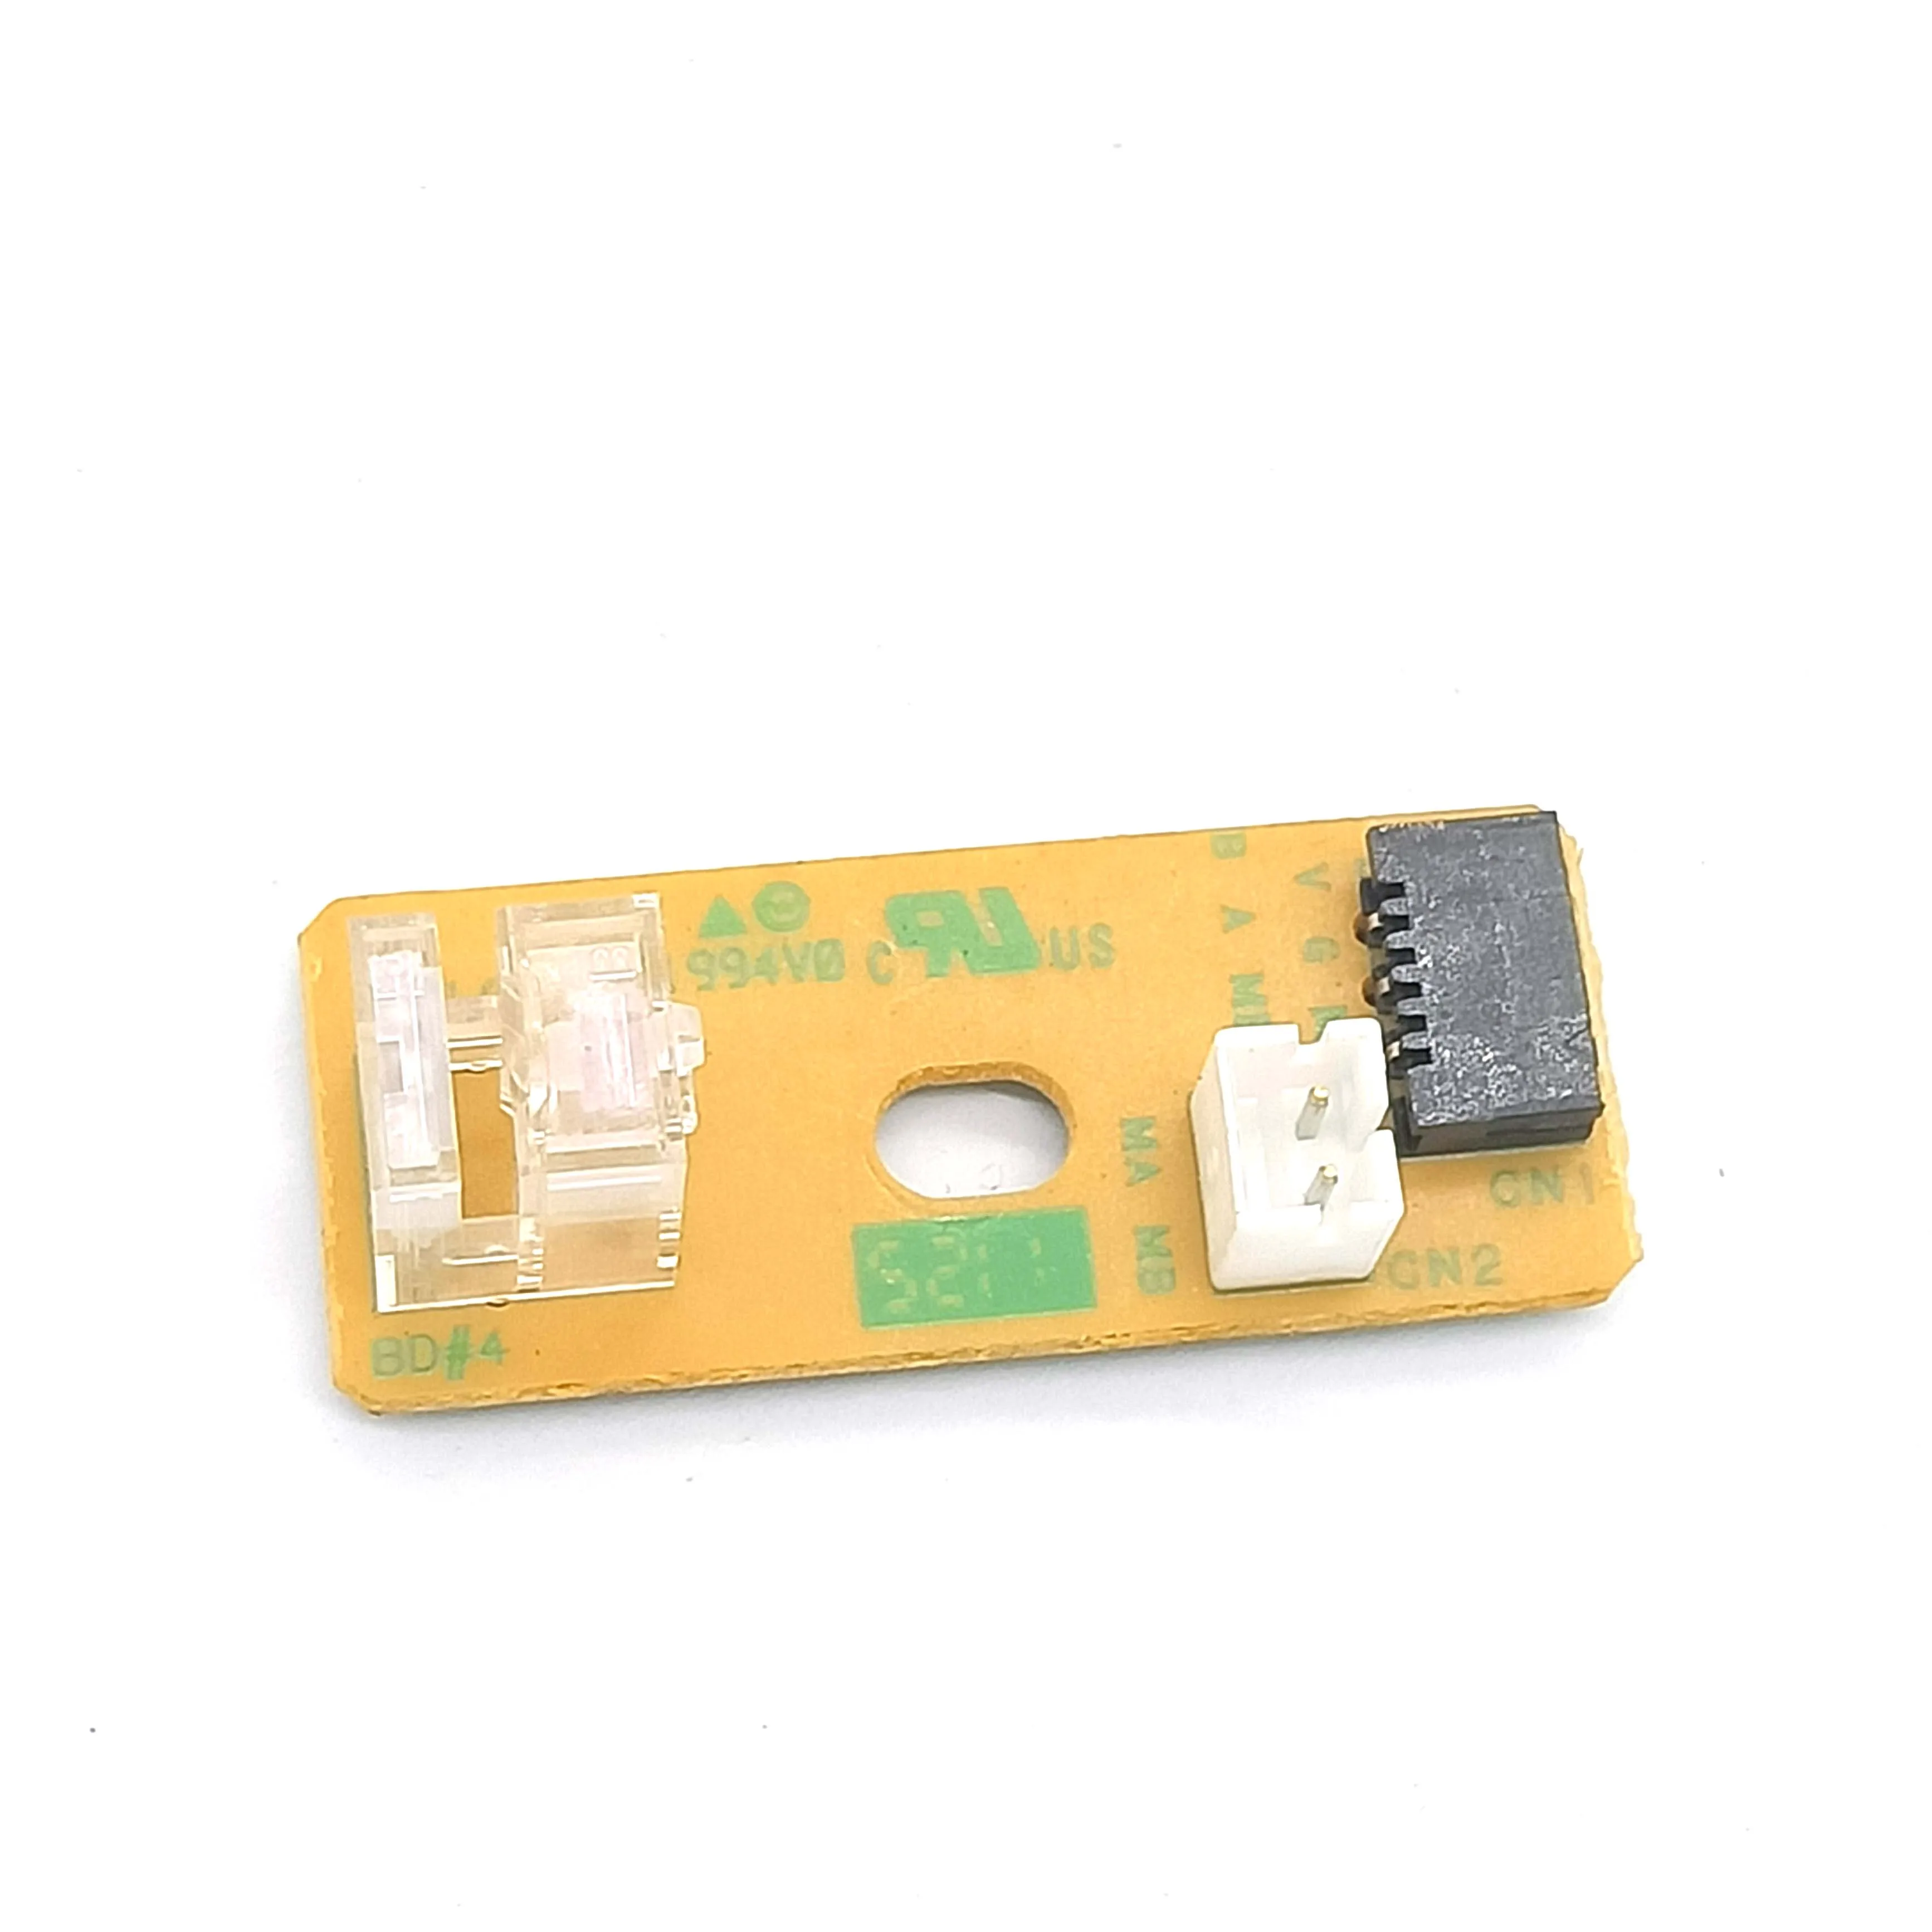 

Encoder Disc Sensor Pro 4910 Fits For Epson 4910 4900 4908